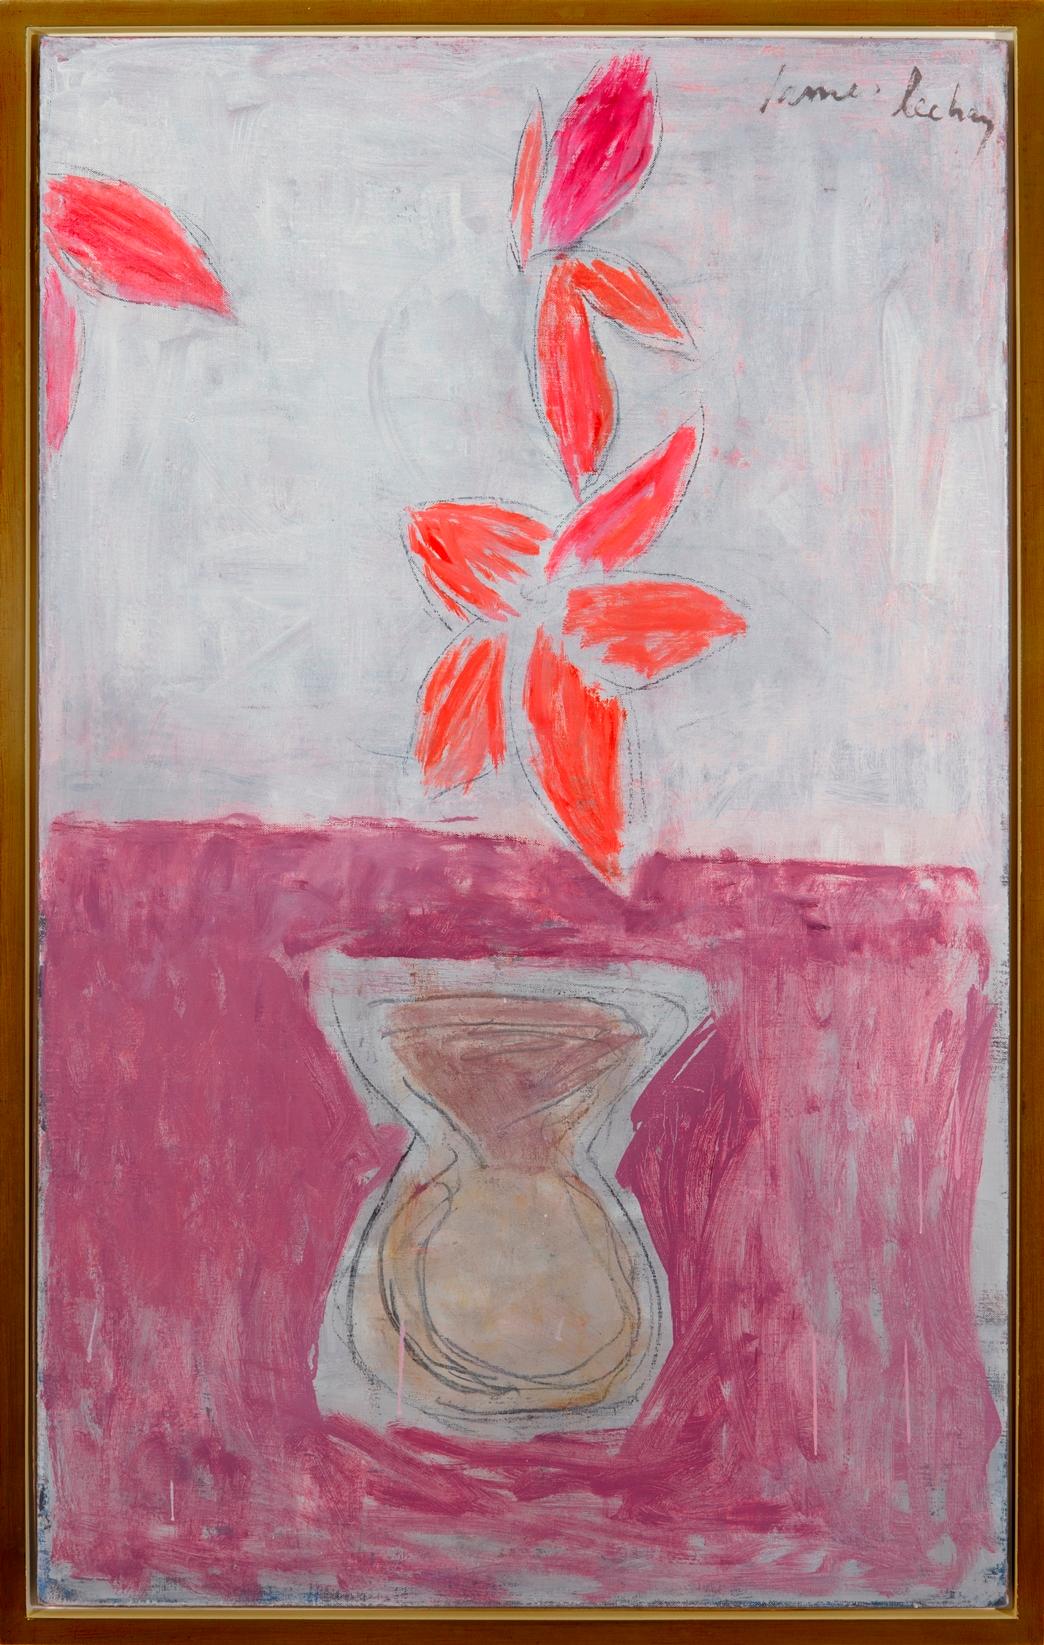 James Lechay Abstract Painting – ""Rosafarbene Vase mit Blumen"